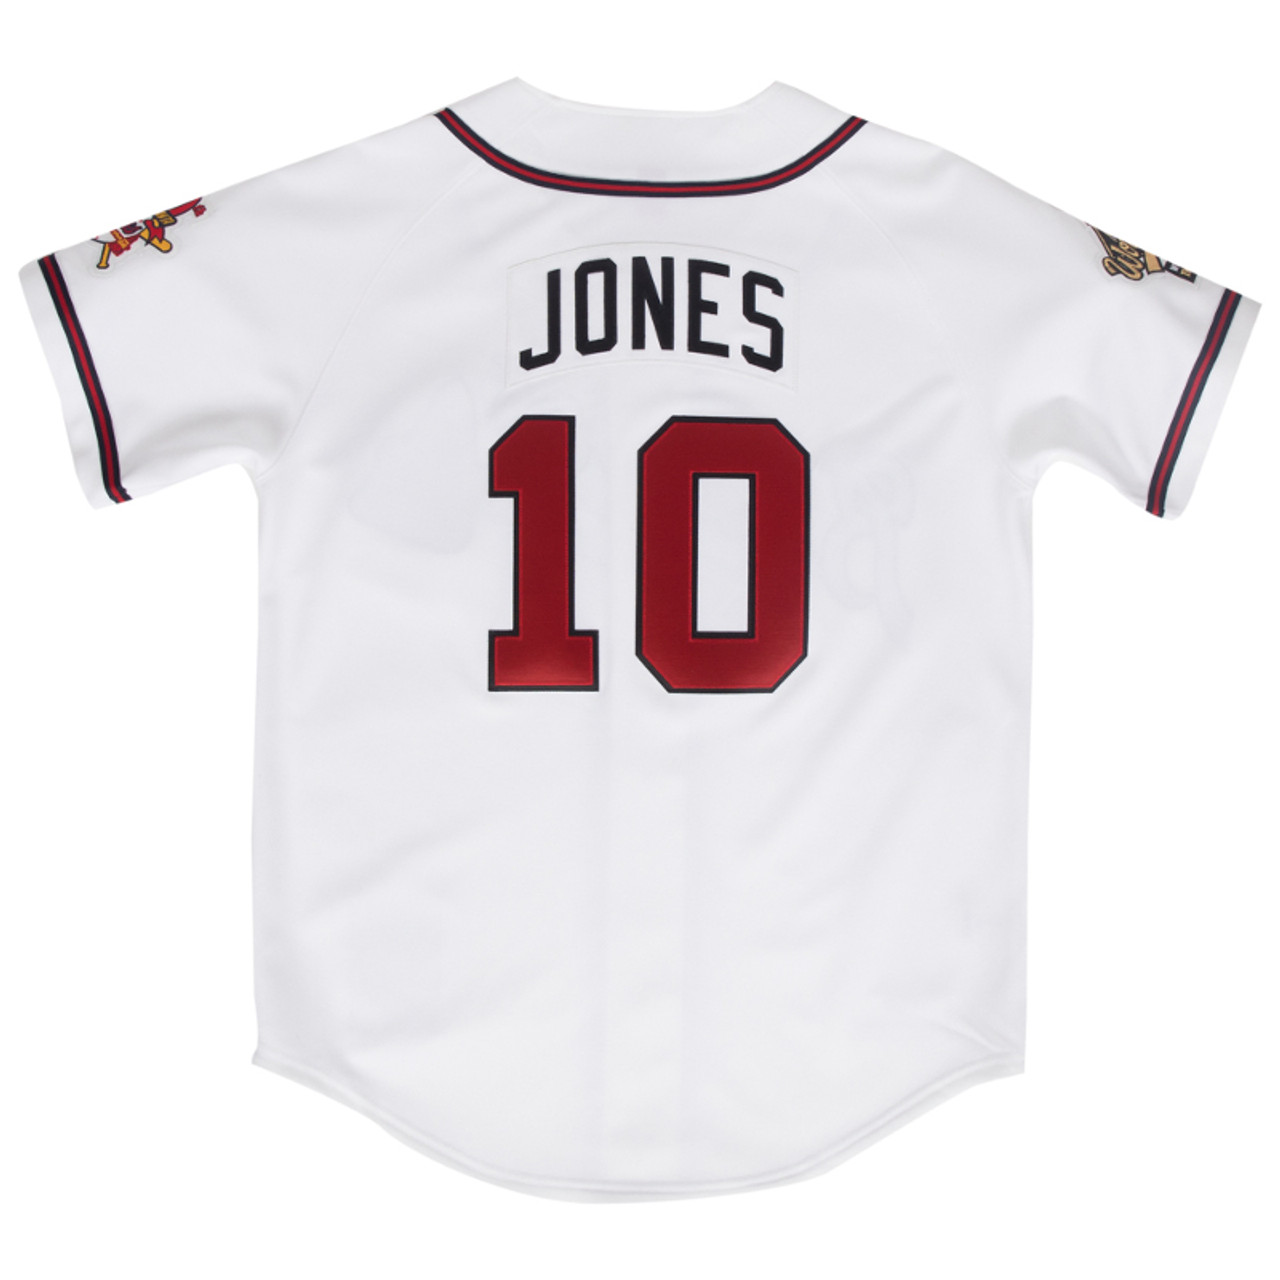 Jones Josh replica jersey